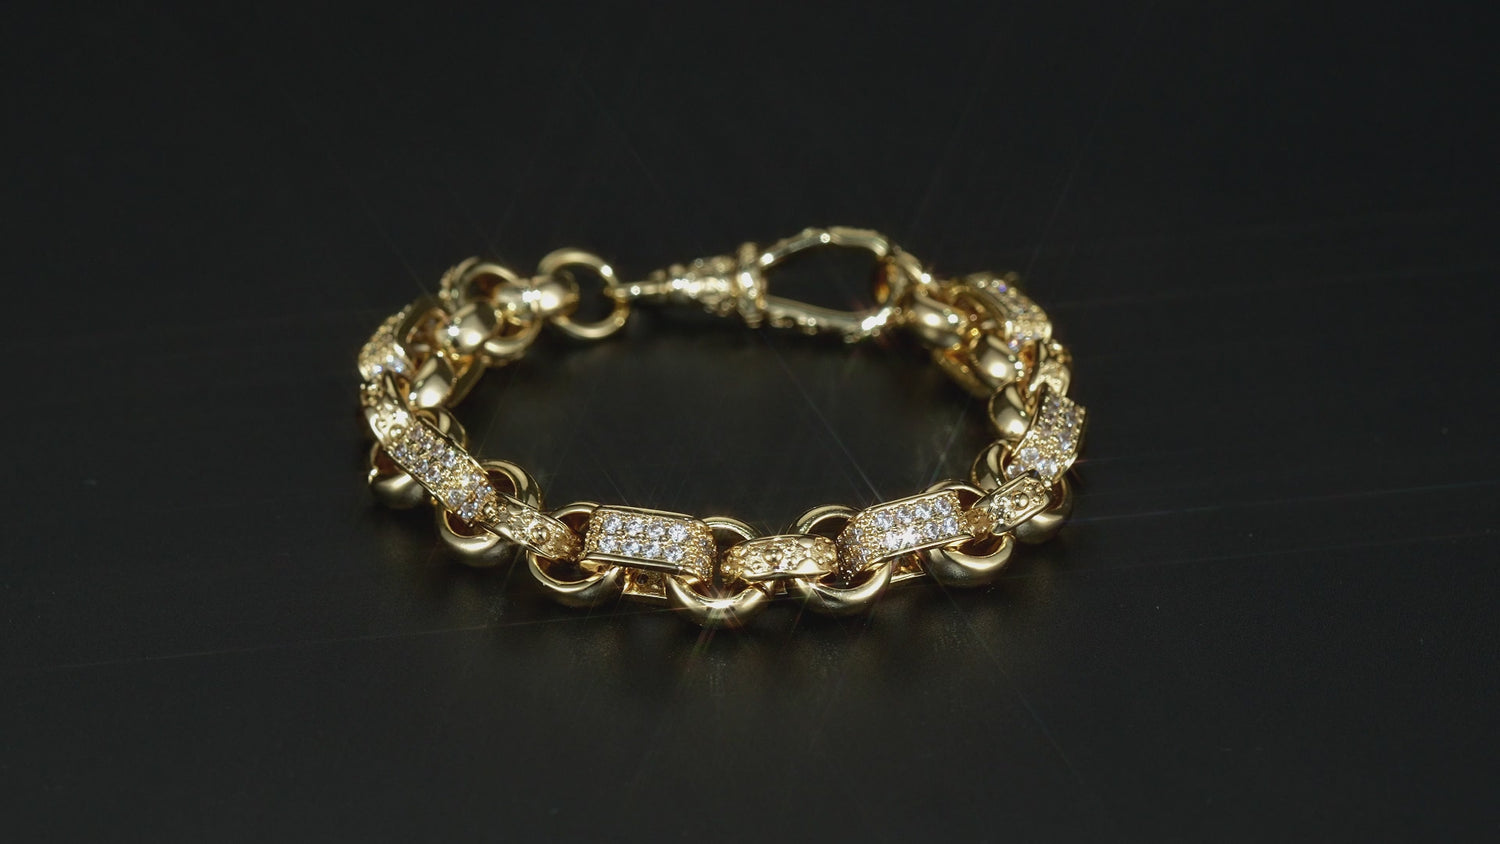 Luxury Gold 10mm Gypsy Link Belcher Bracelet with Albert Clasp